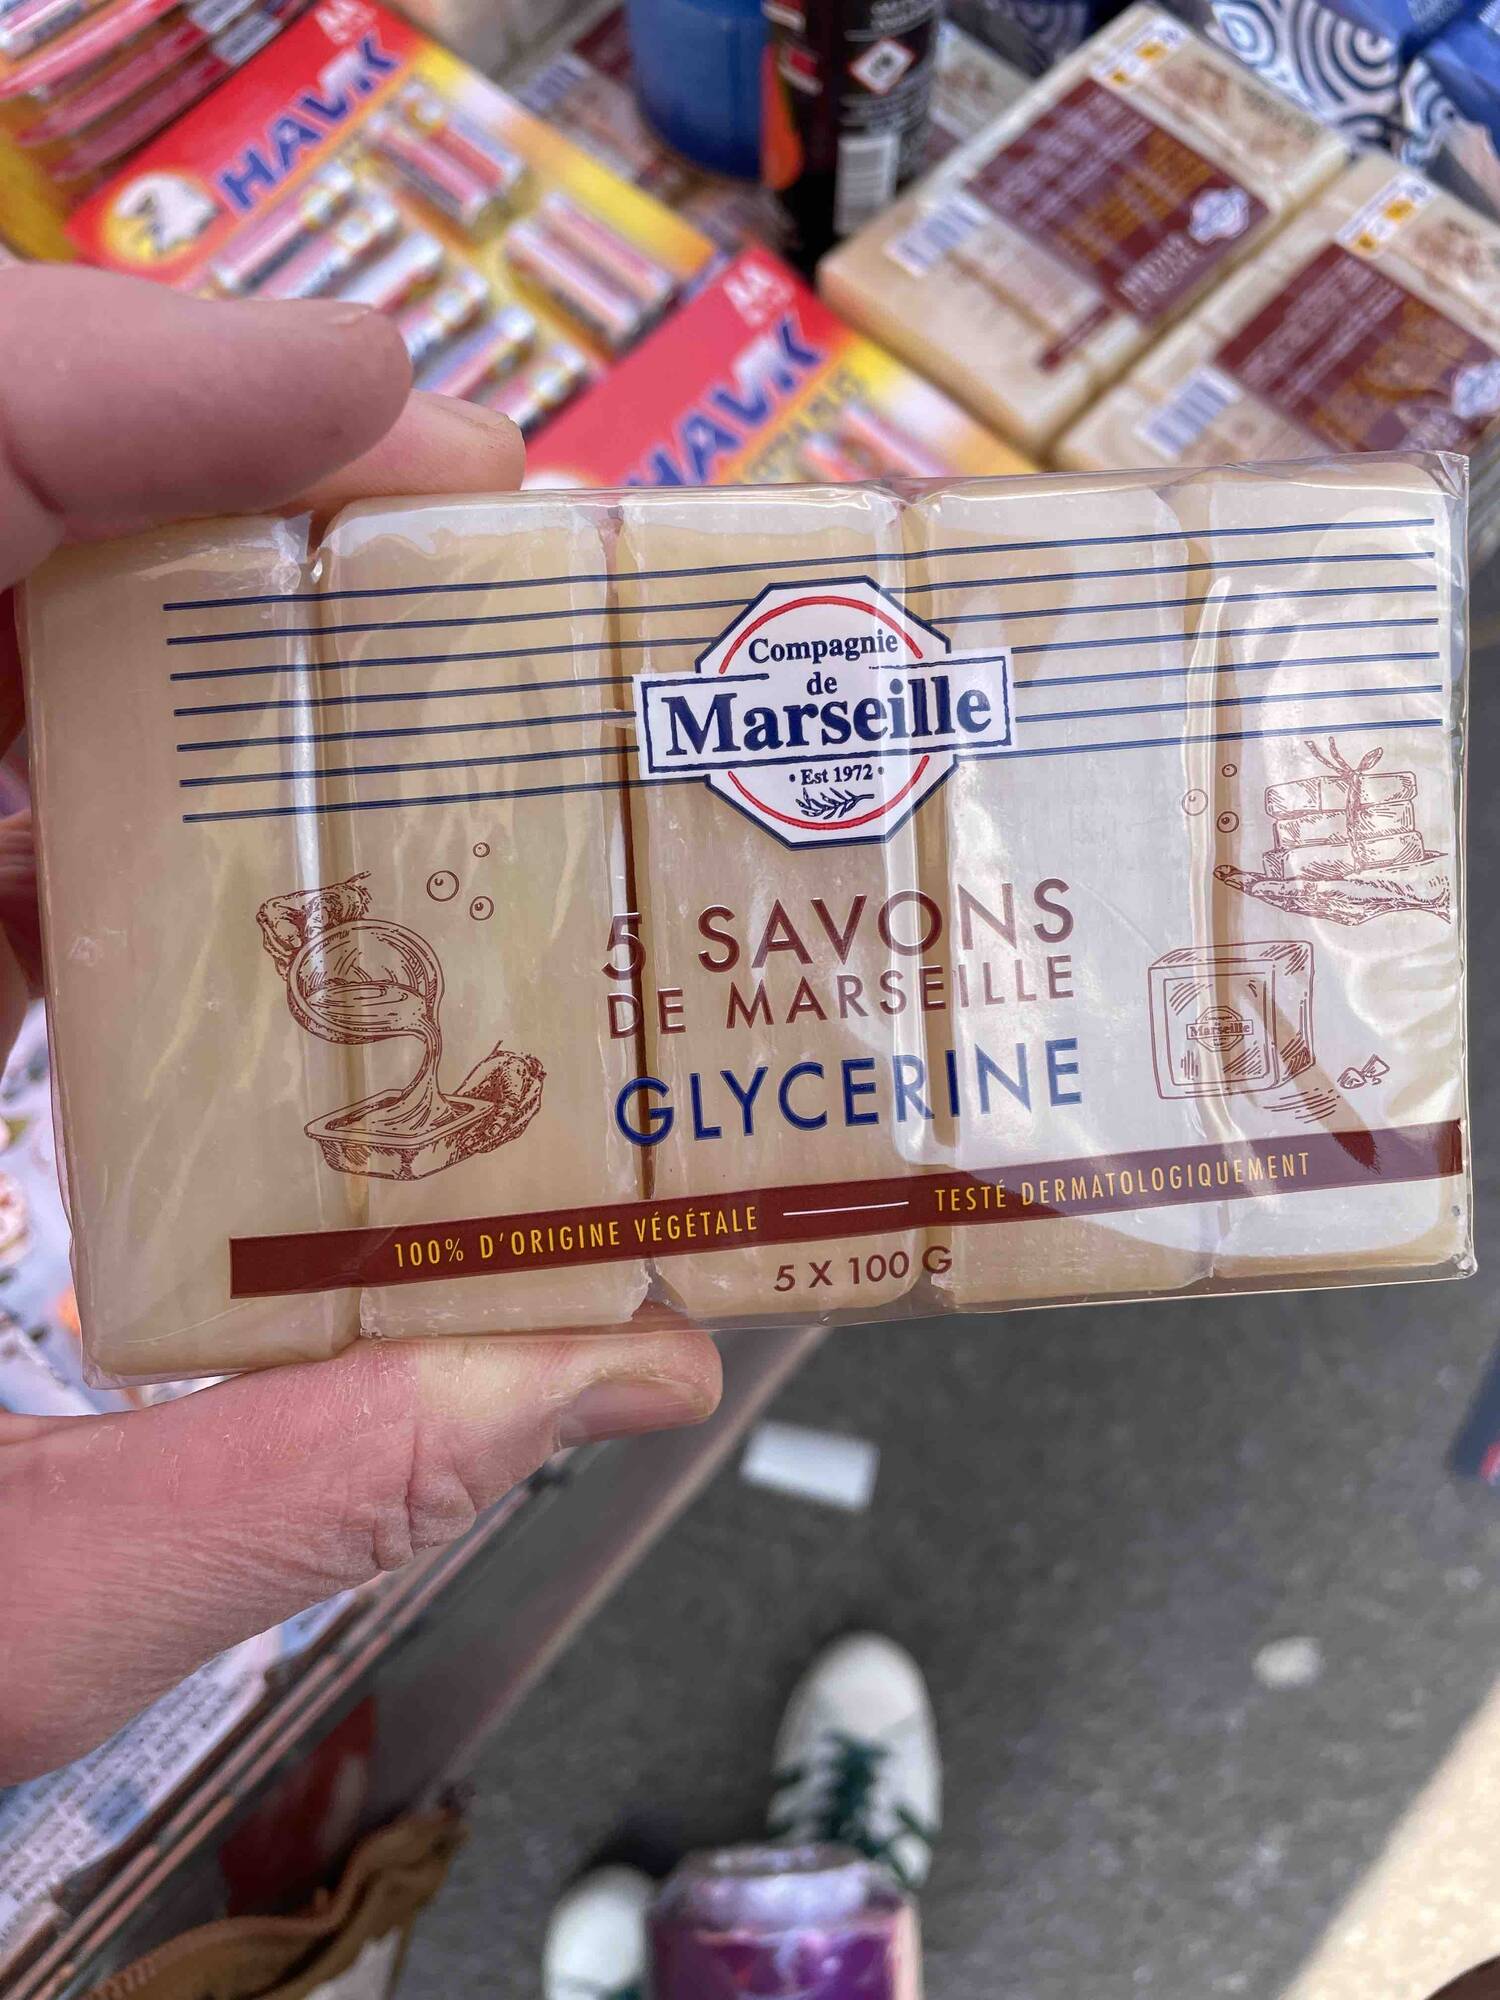 COMPAGNIE DE MARSEILLE - 5 savons de Marseille glycériné